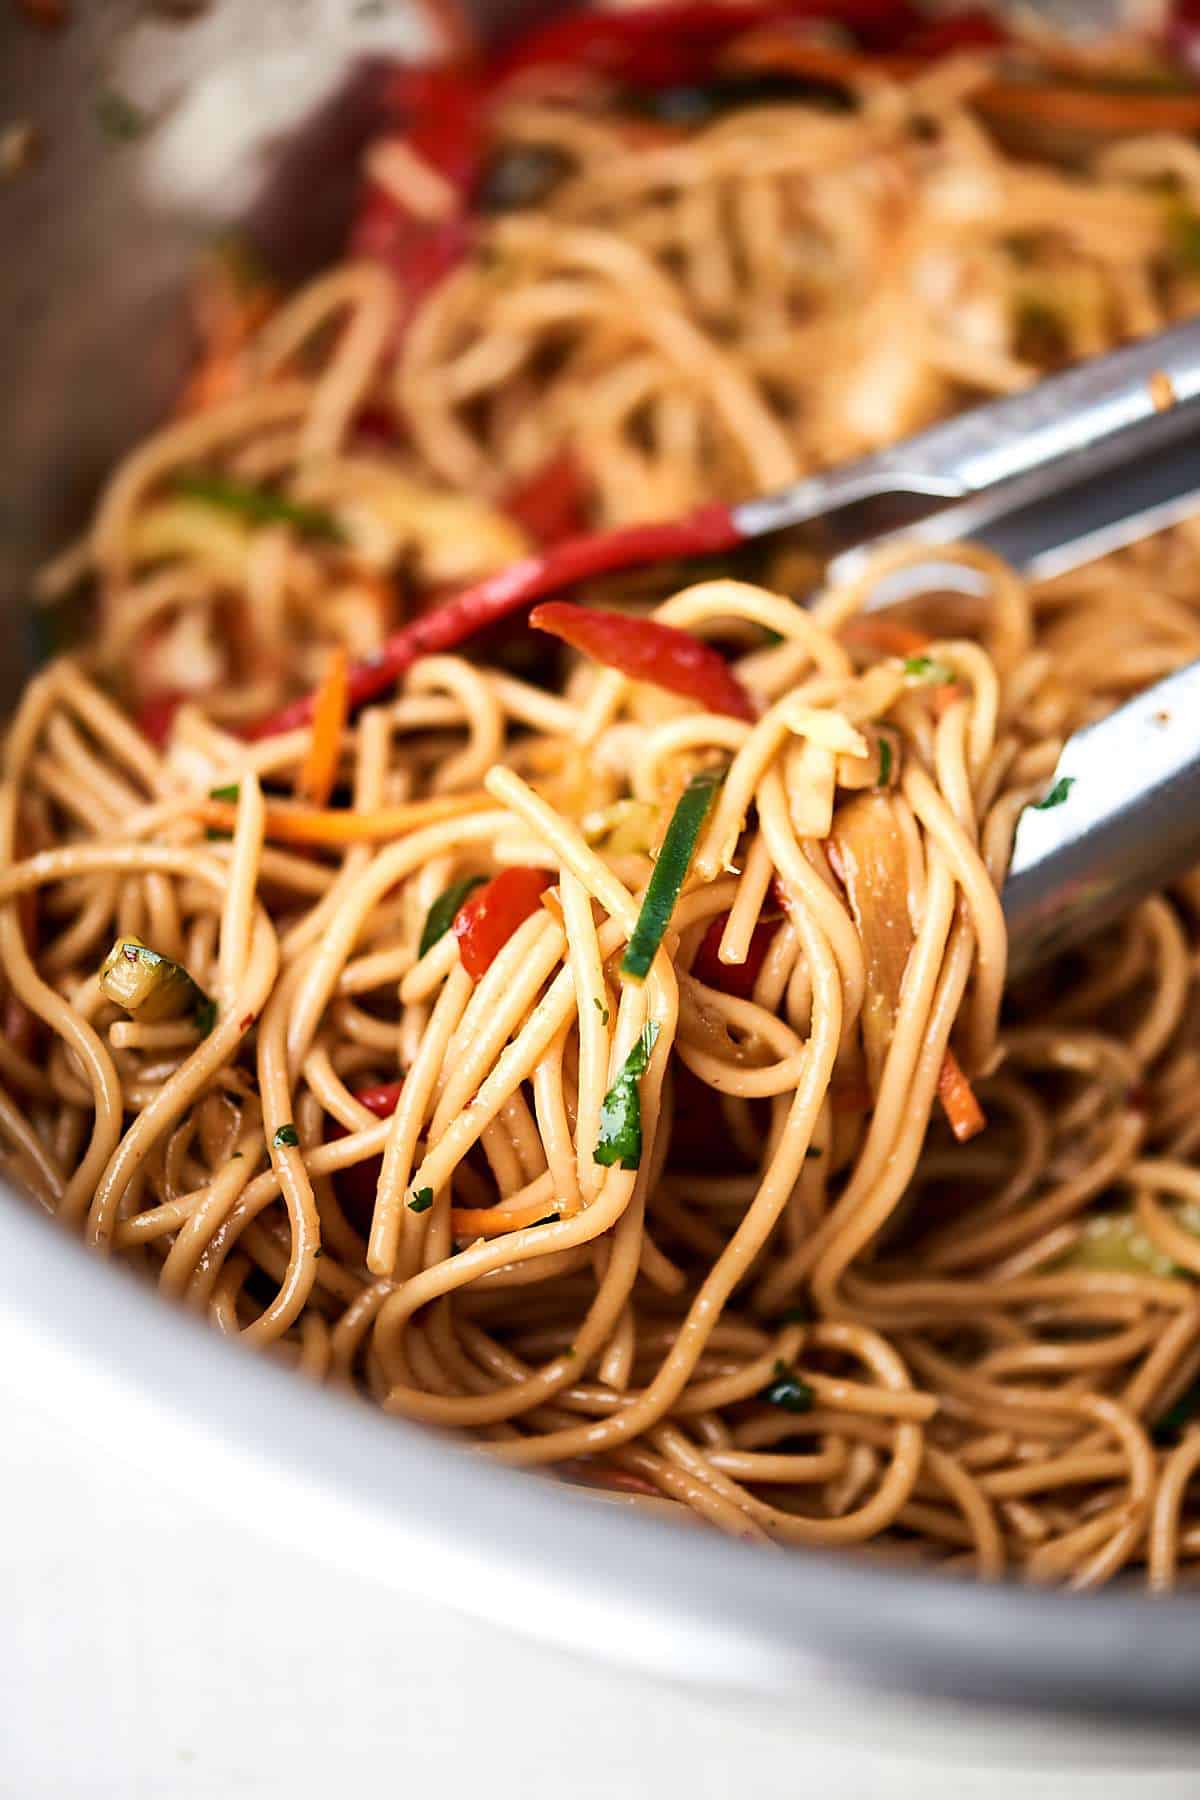 Asian Pasta Salad Recipe - No Mayo, Light, Healthy-ISH, Quick Prep!